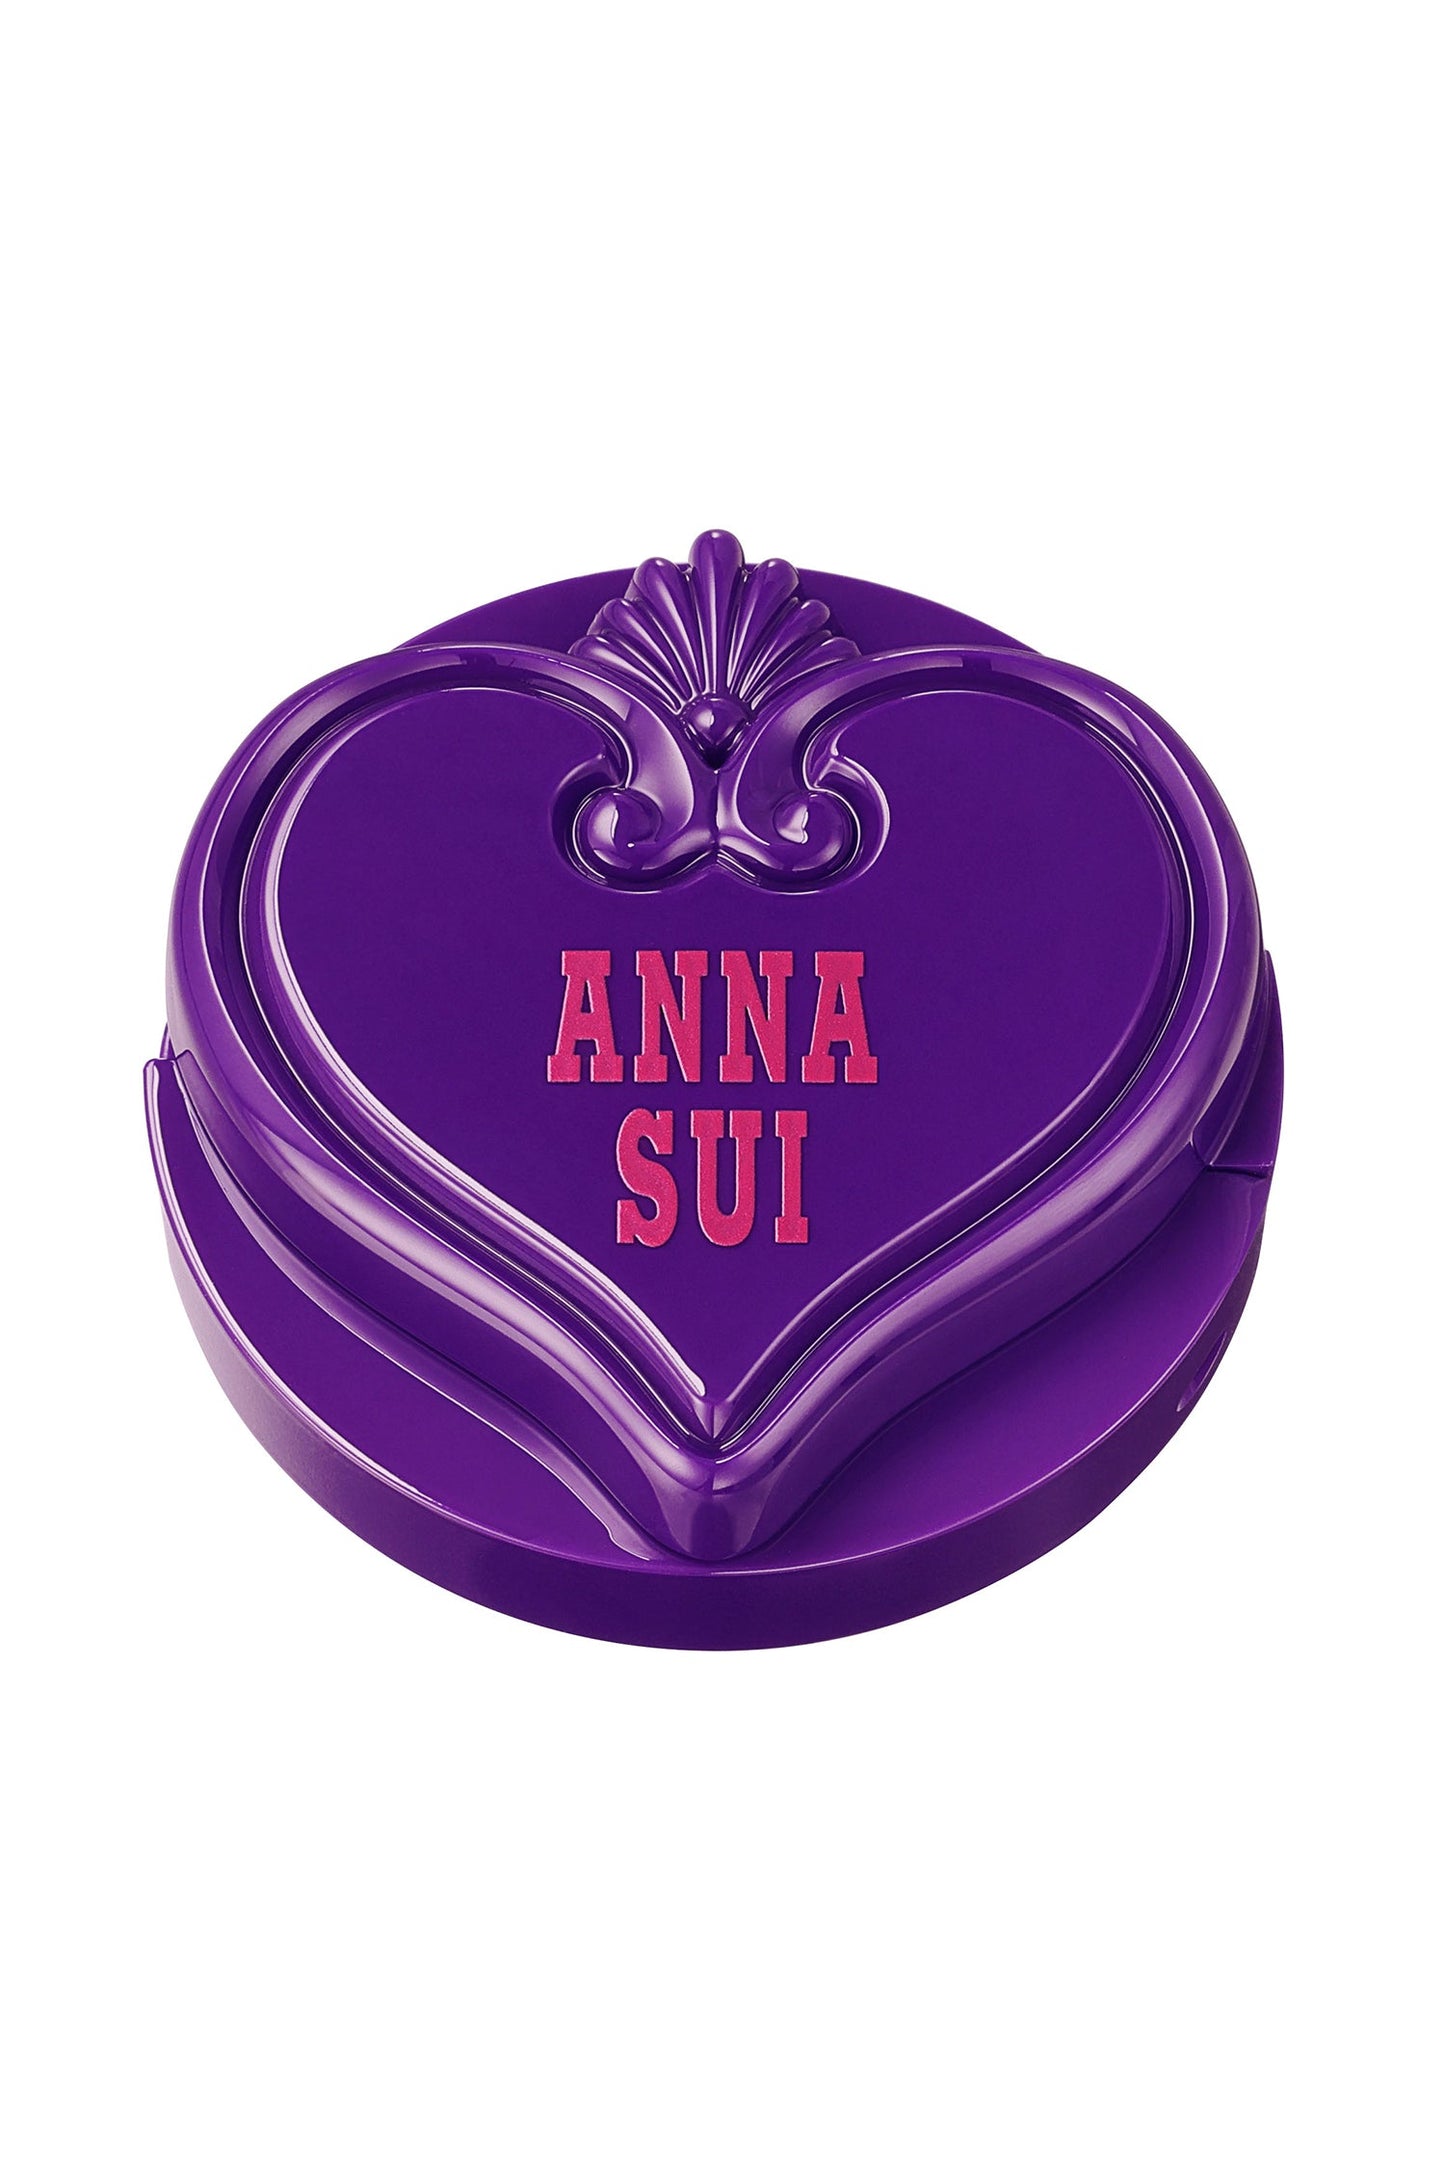 Limited Edition: Anna Sui Vivid Eye Color